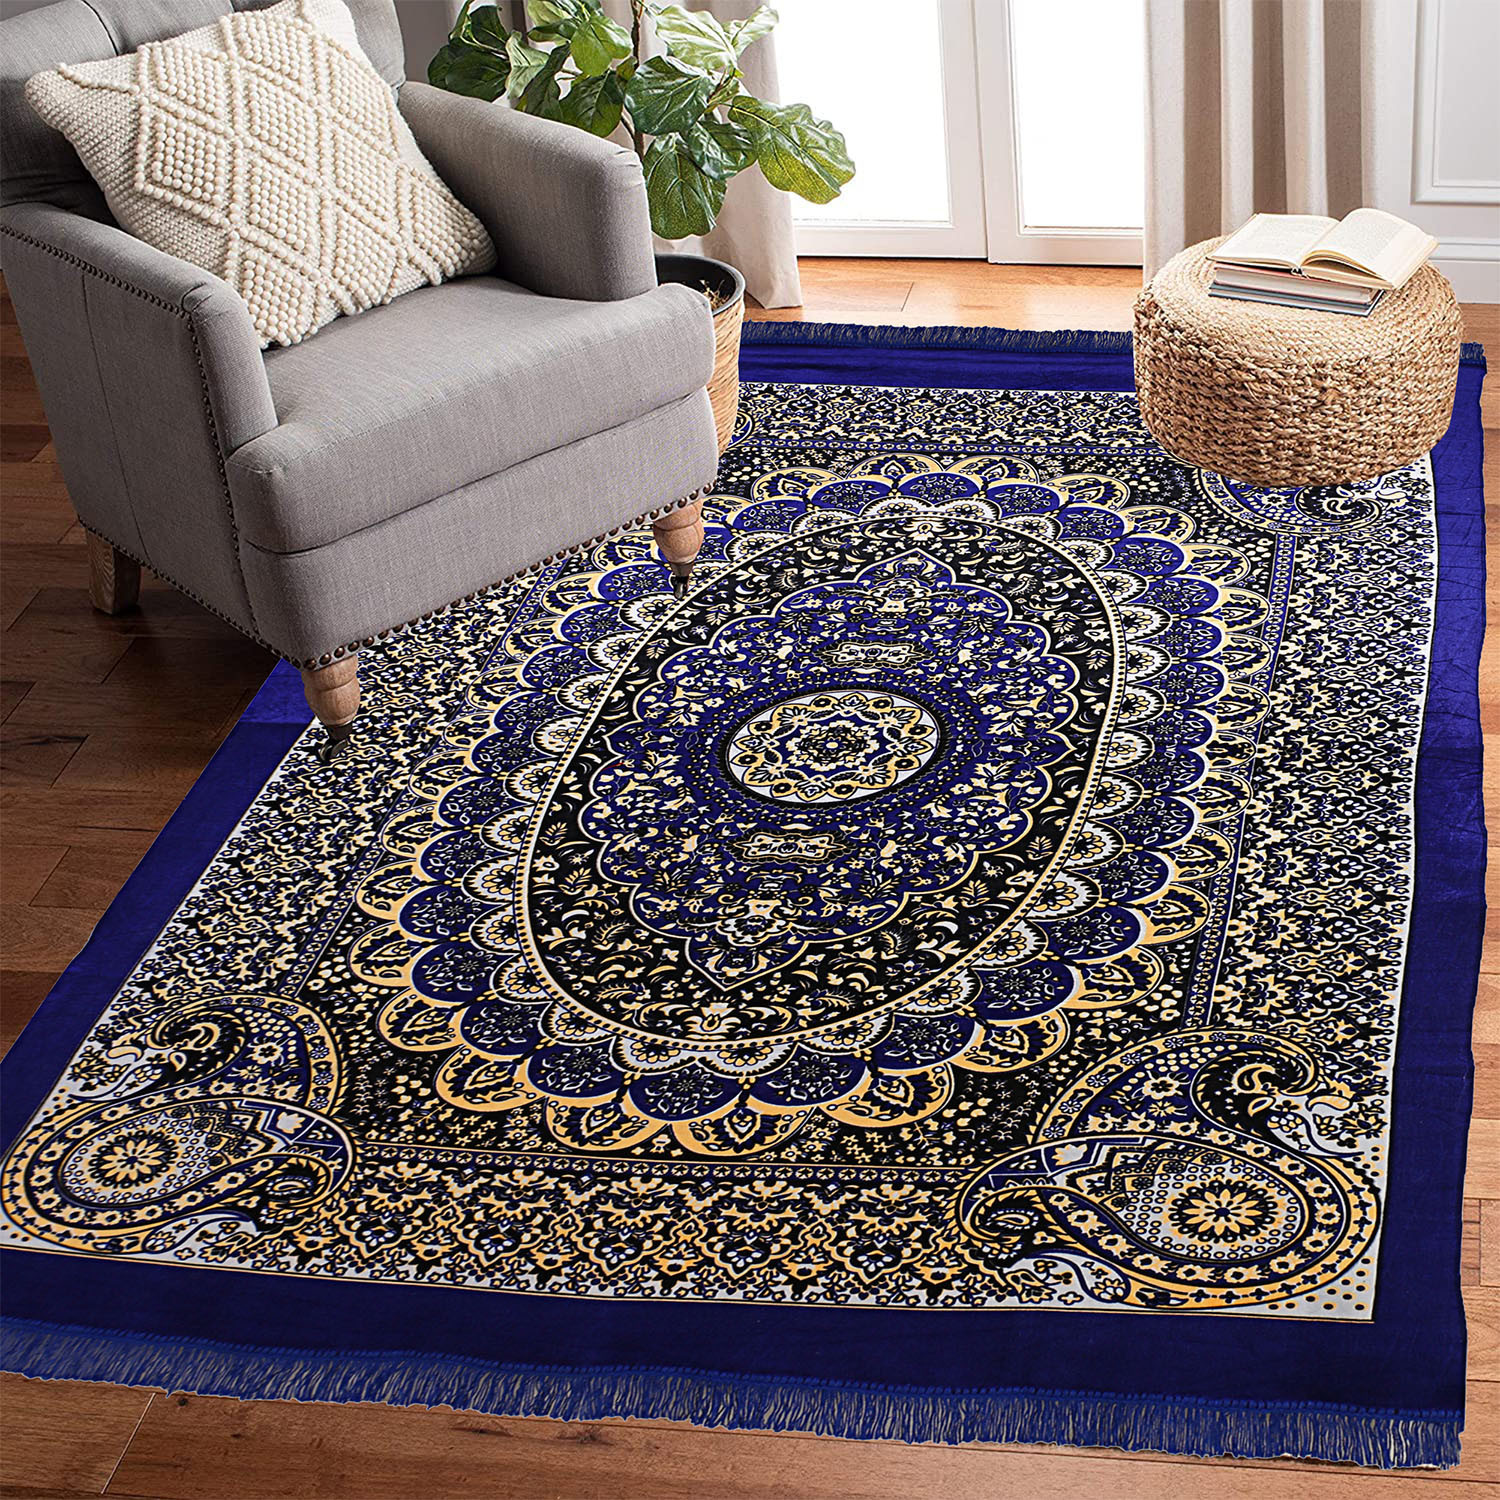 Kuber Industries Carpet|Water Absorption Kalamkari Paisley Pattern Floor Mat|Velvet Sitting Carpet for Hall, Living Room, 5x7 Feet (Navy Blue)